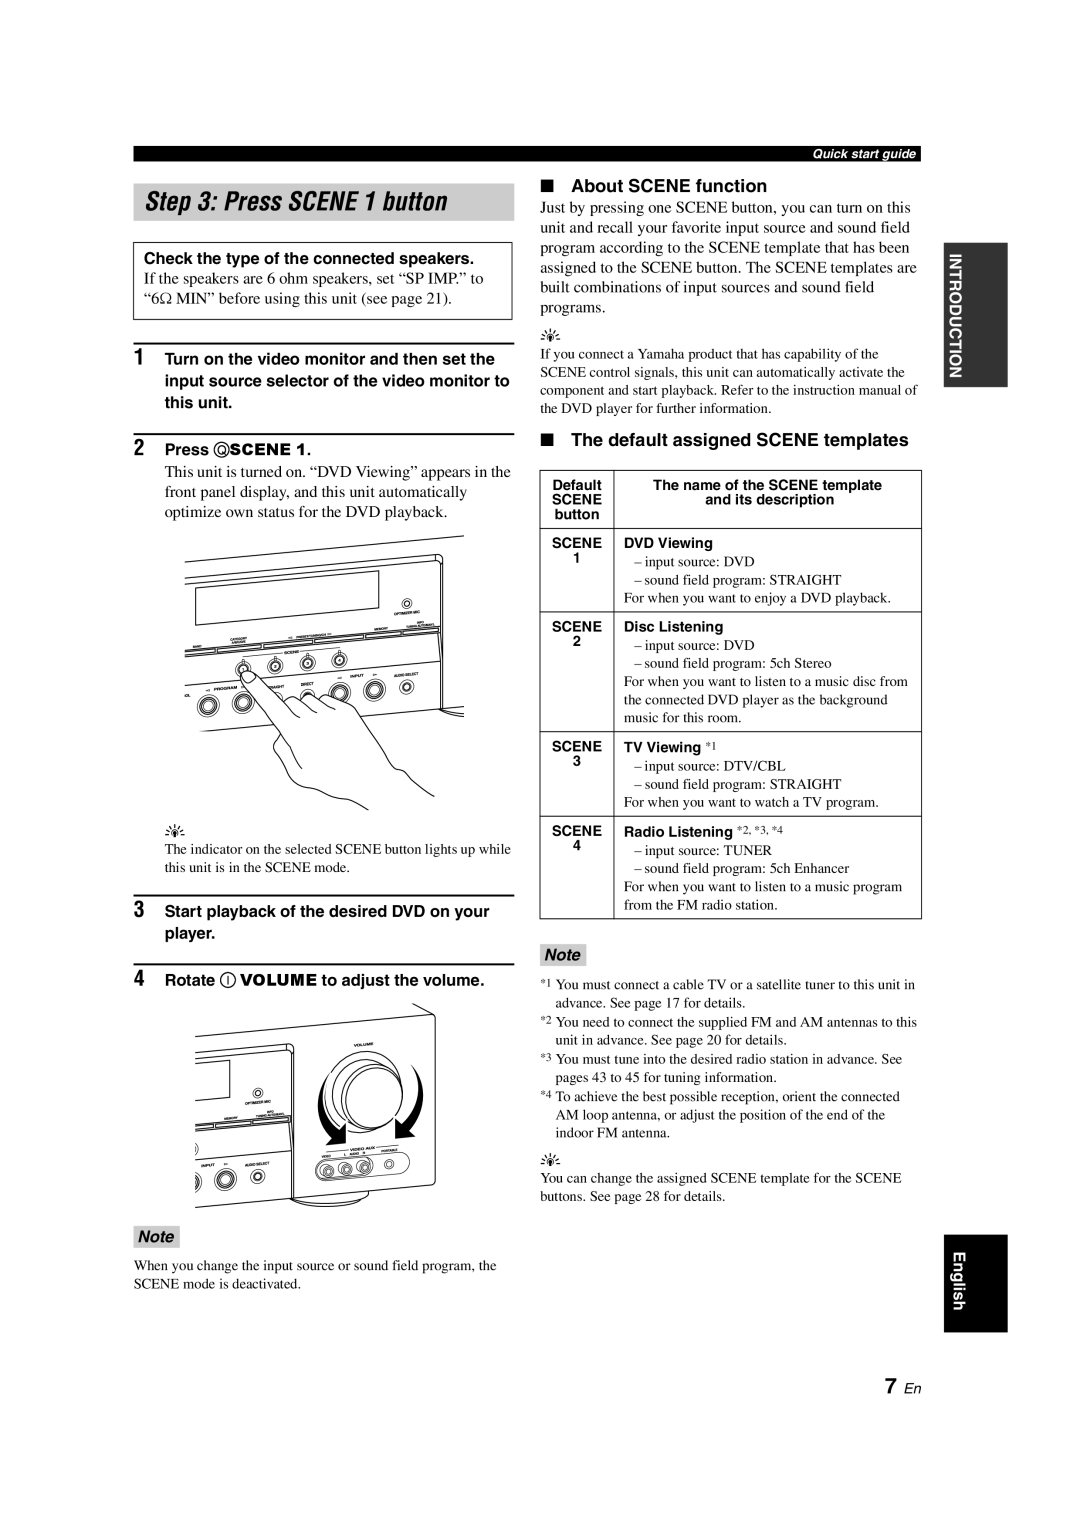 Yamaha HTR-6140 owner manual 7 En, About SCENE function, The default assigned SCENE templates, Press SCENE 1 button 